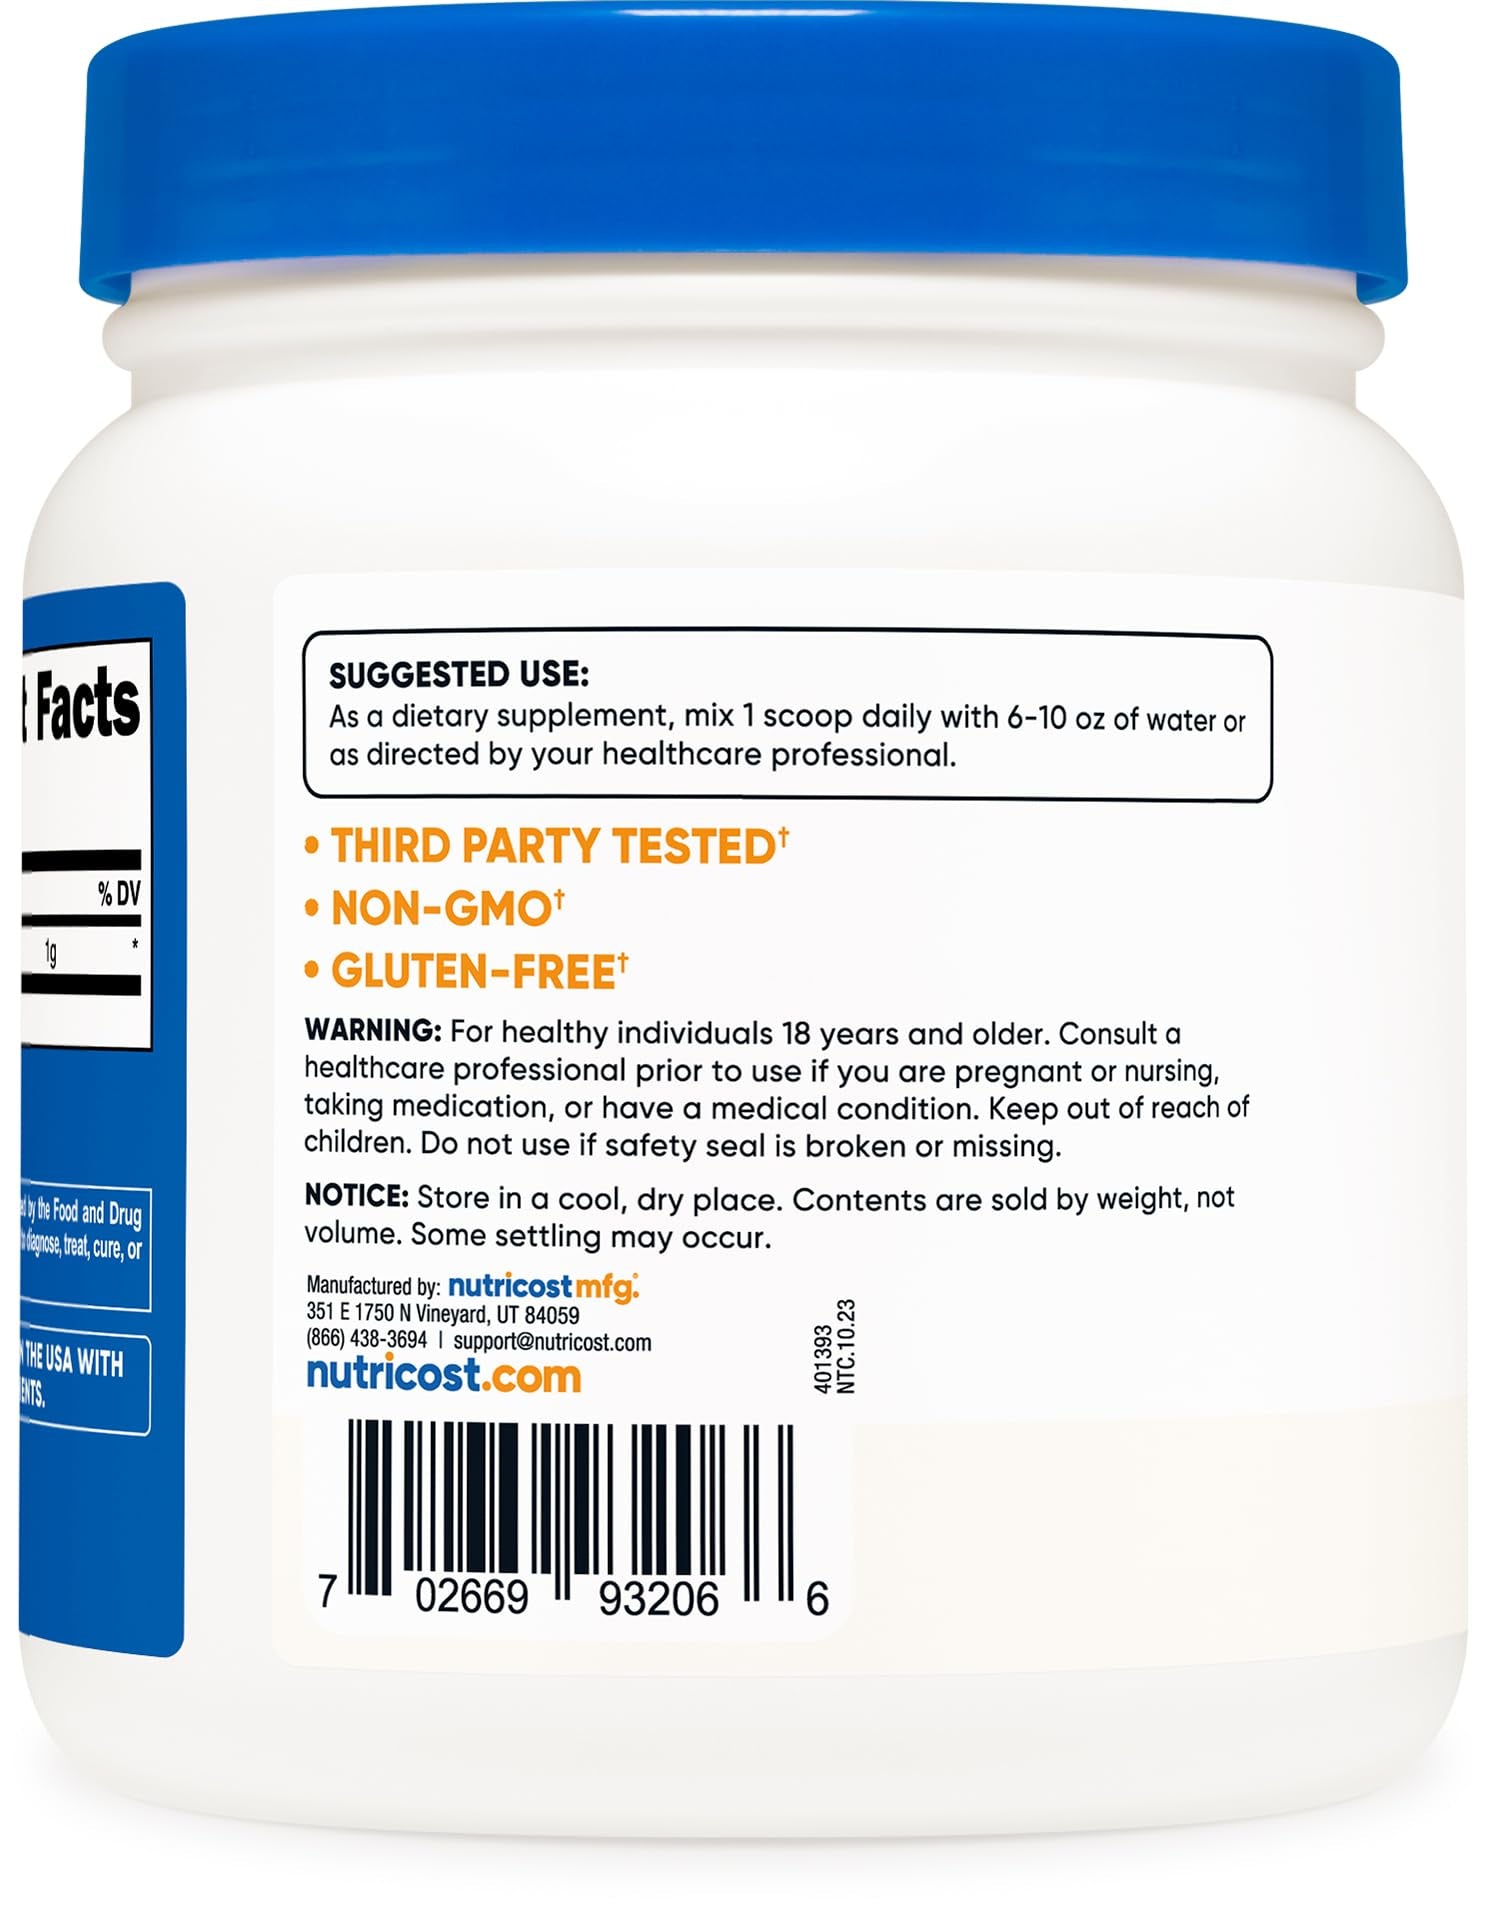 Nutricost Methylsulfonylmethane - MSM Powder 1g (1000mg) | 1g per Serving | 500 Servings | 17.9oz /500g Exp 12/2026 - Ome's Beauty Mart